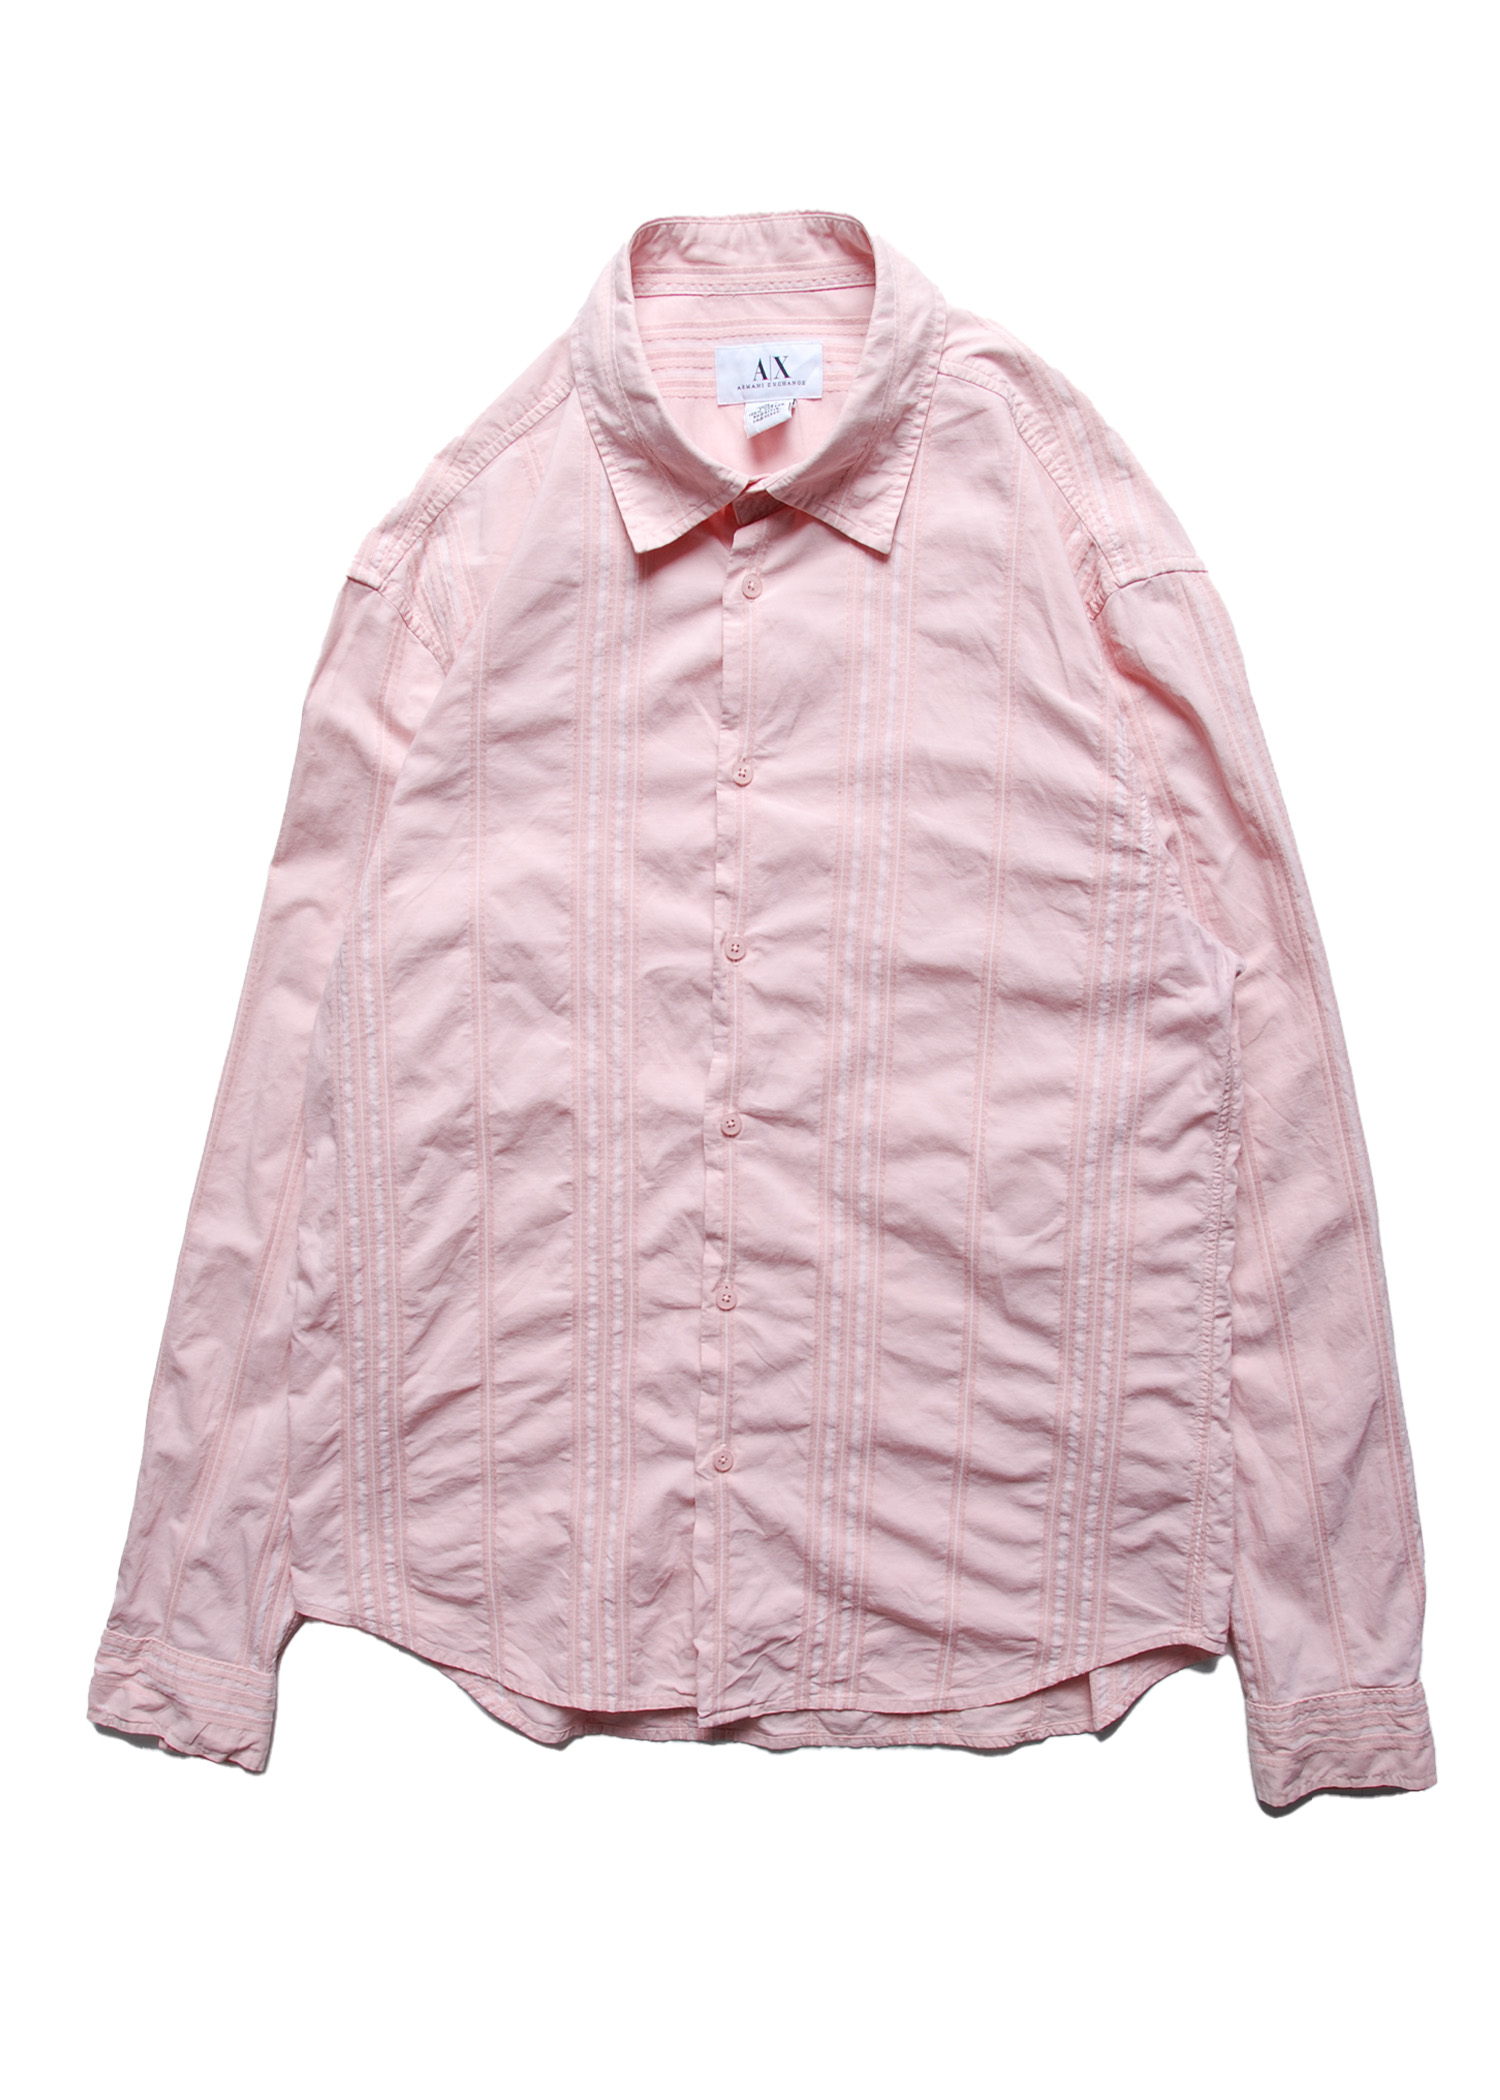 Armani Exchange pink shirts